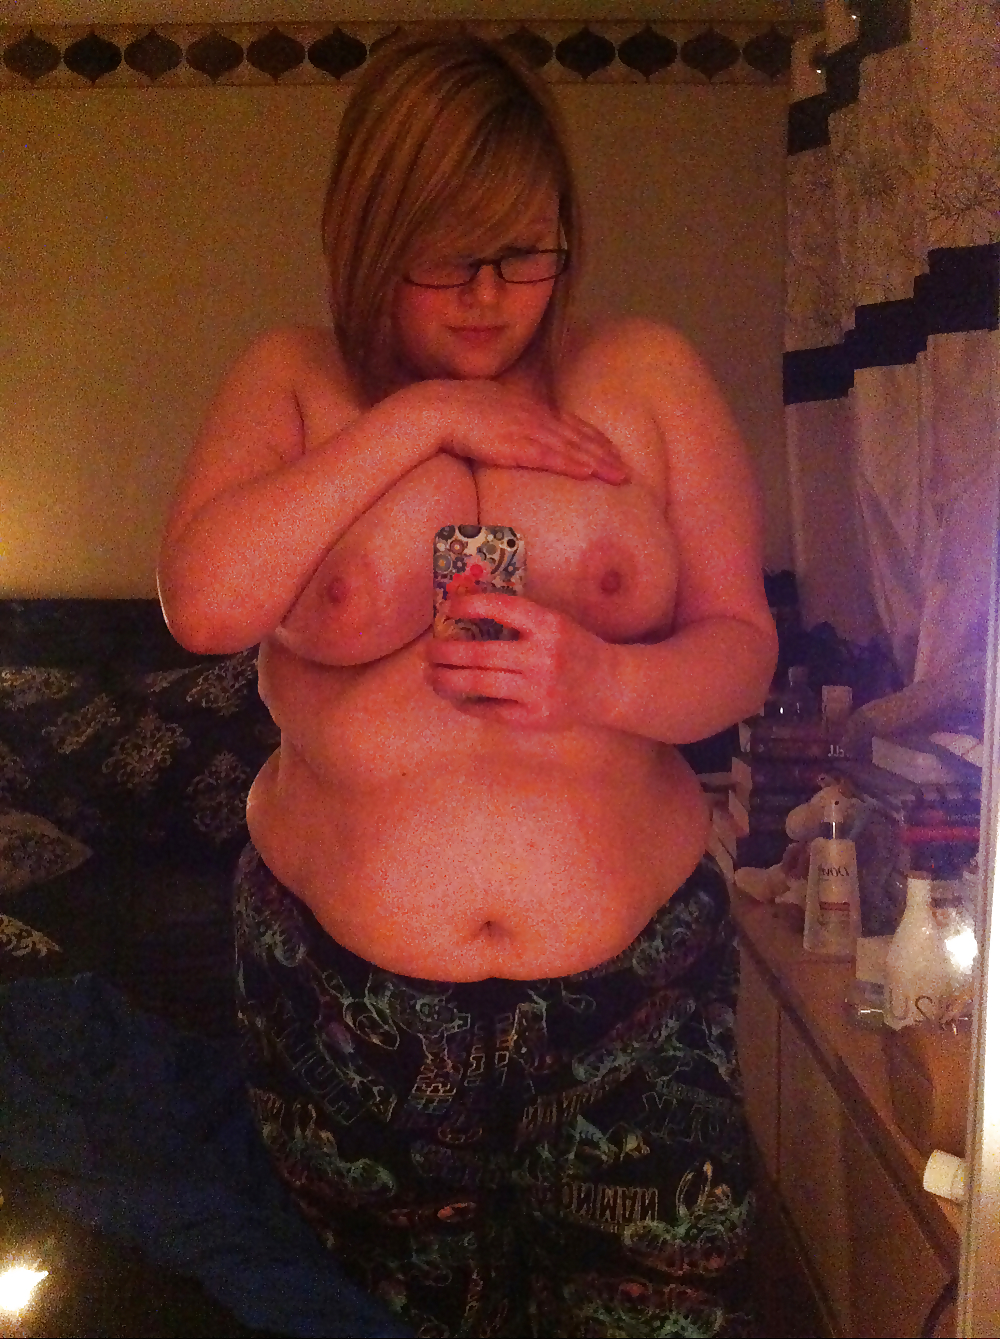 BBW & Chubby - Plus sized women -22- porn pictures